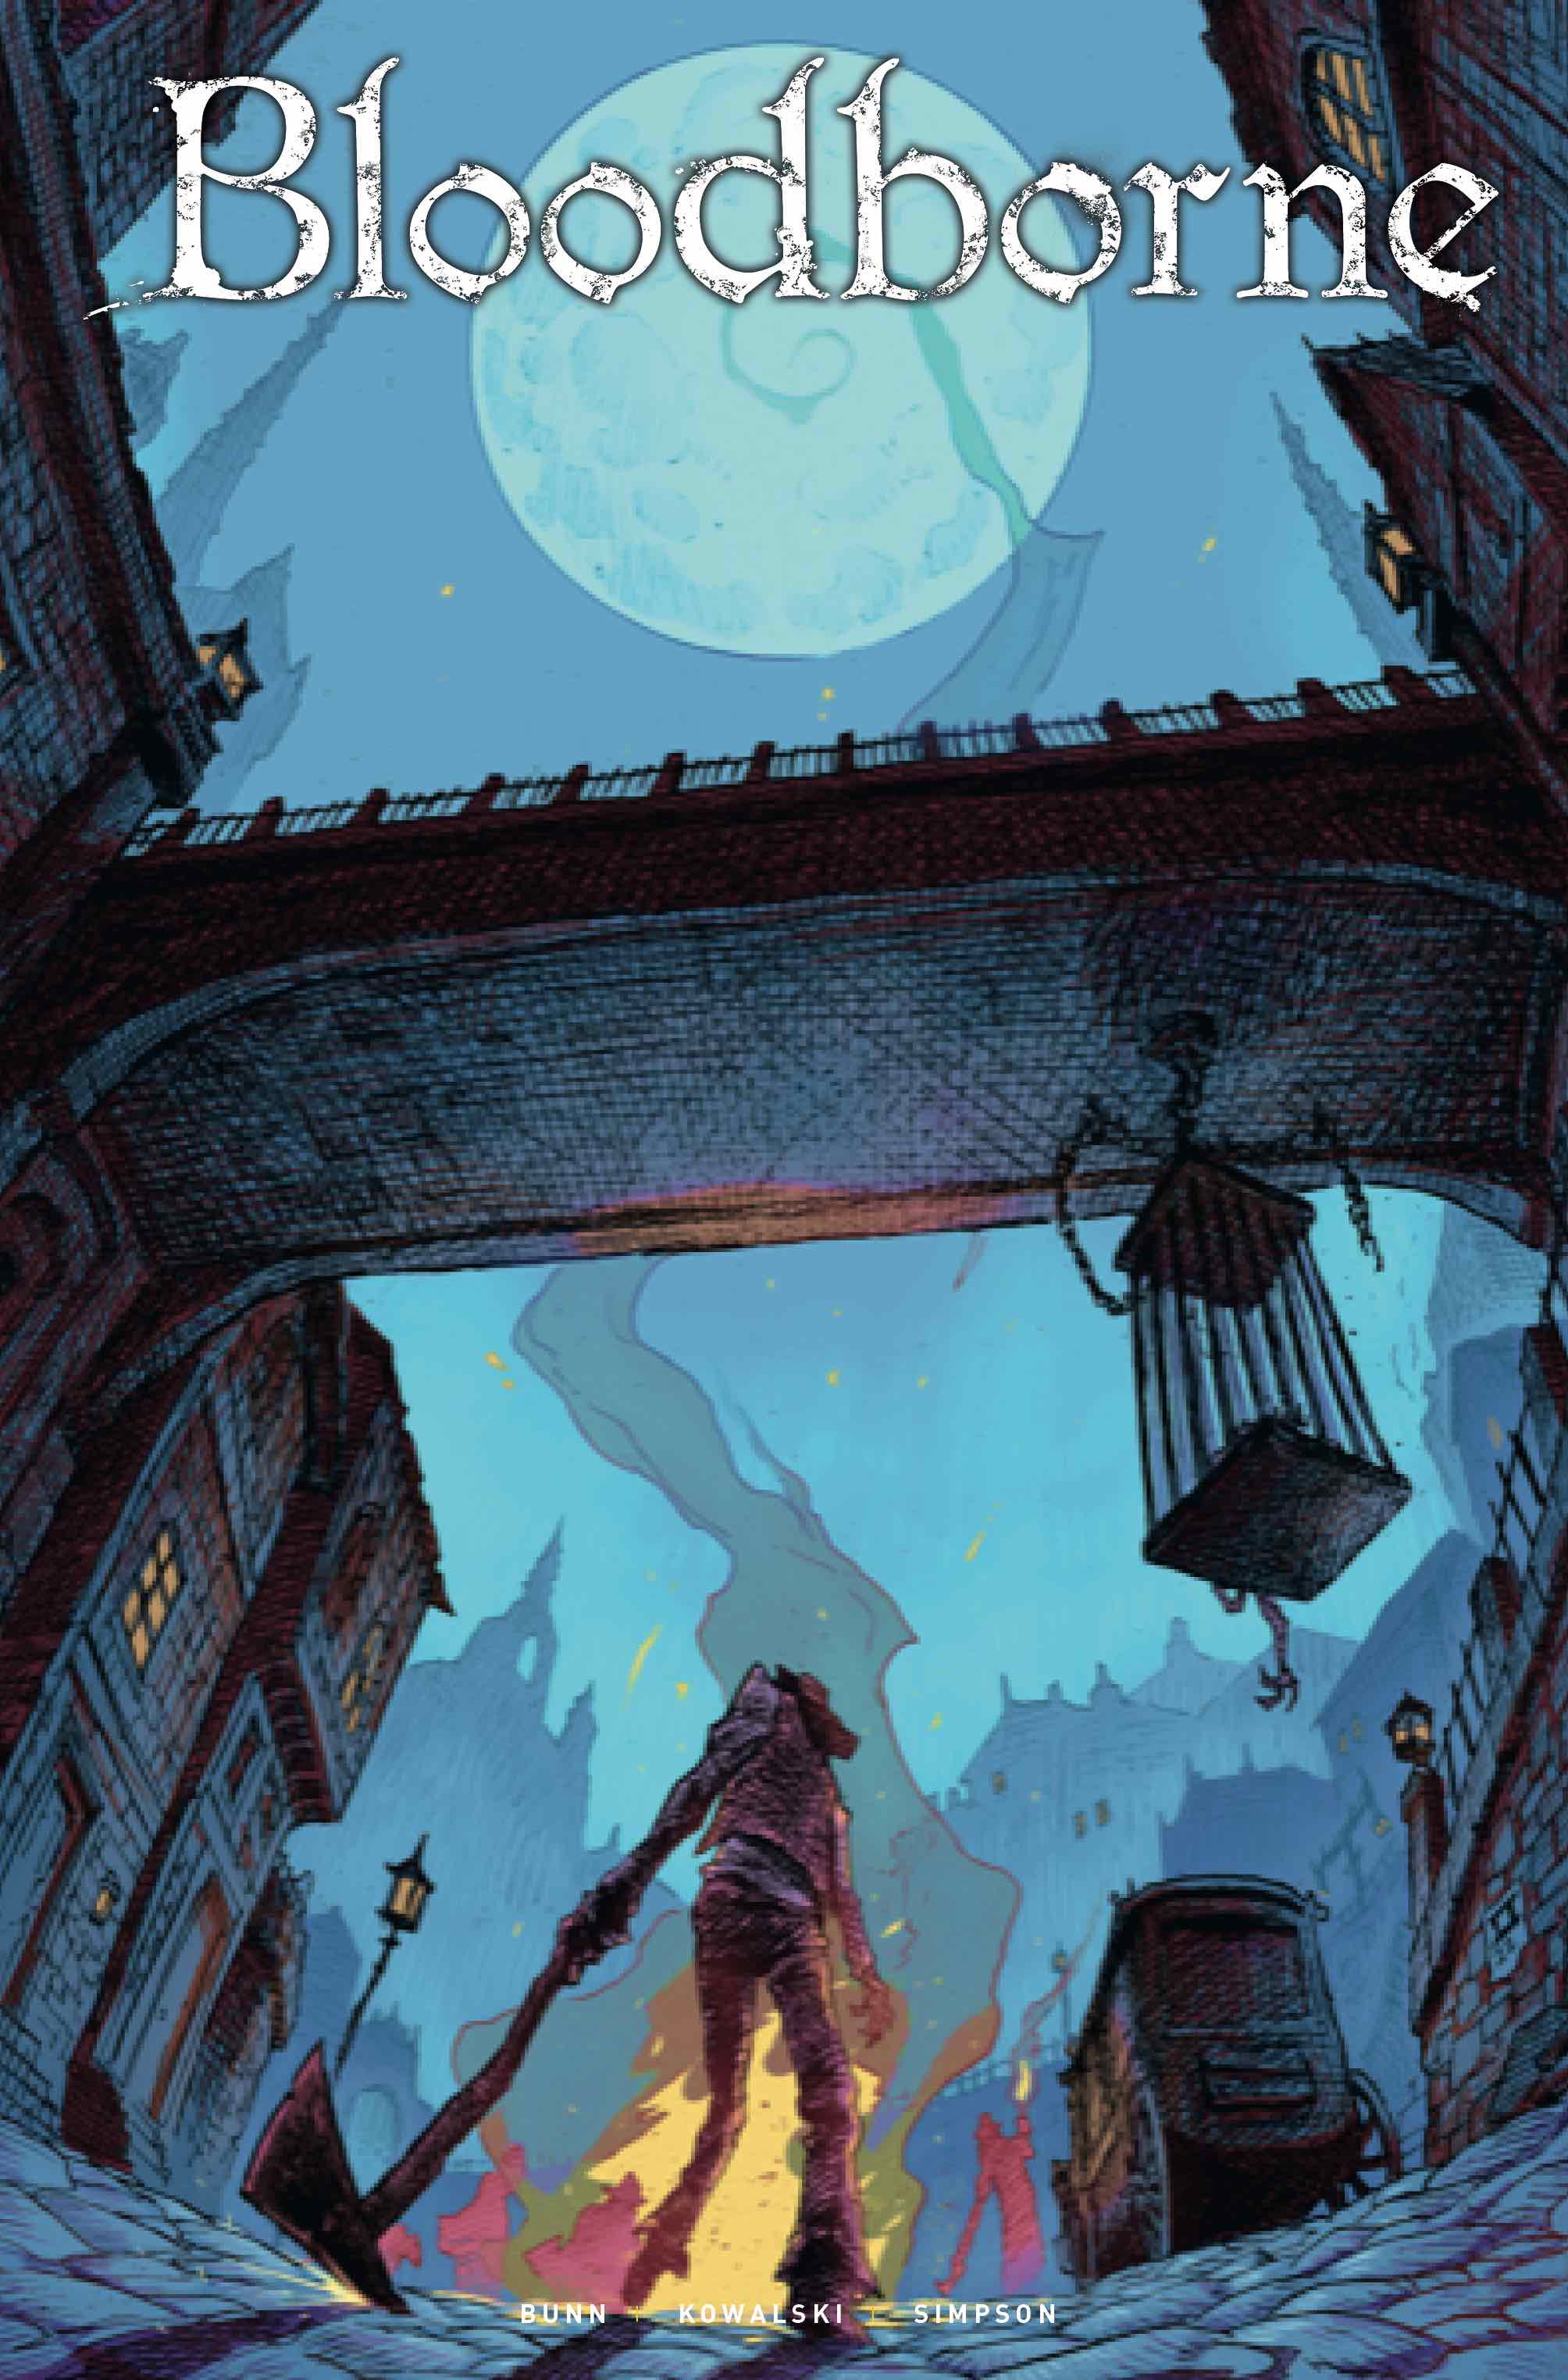 Portada variante de Bloodborne: Lady of the Lanterns #2 por Jeff Stokely